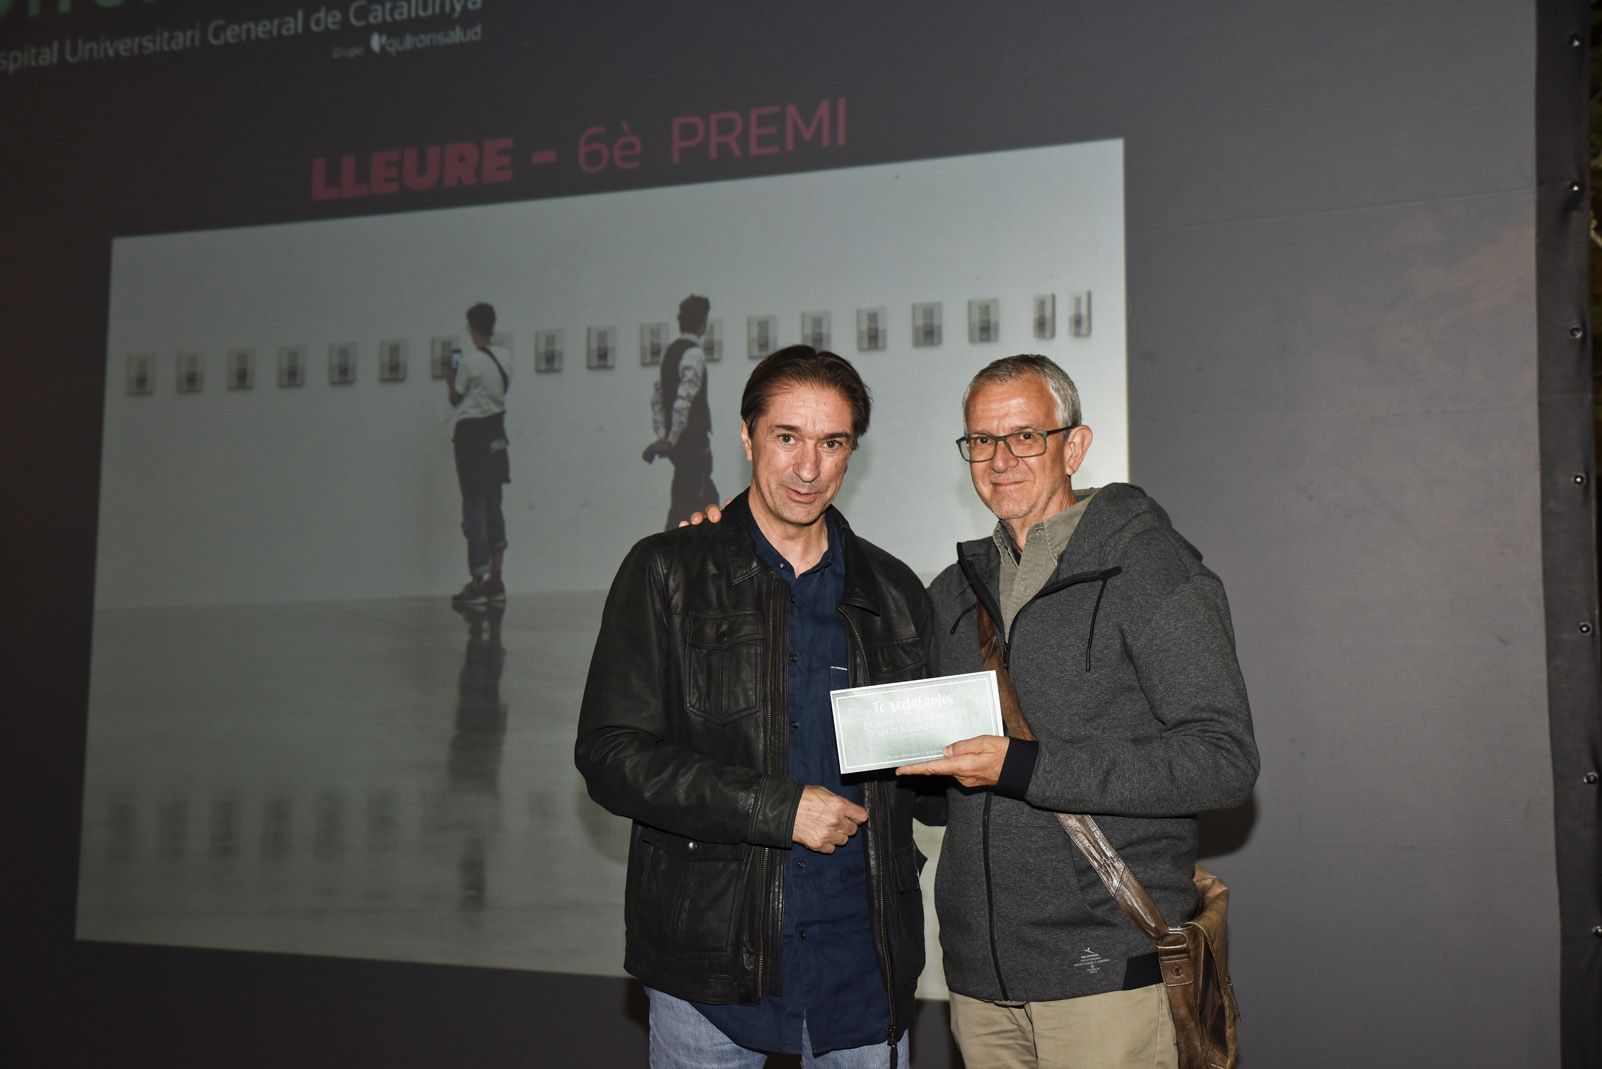 6è premi ‘Lleure’ Jordi Marquez Taña - Un matí al White Cube. Foto: Bernat Millet.